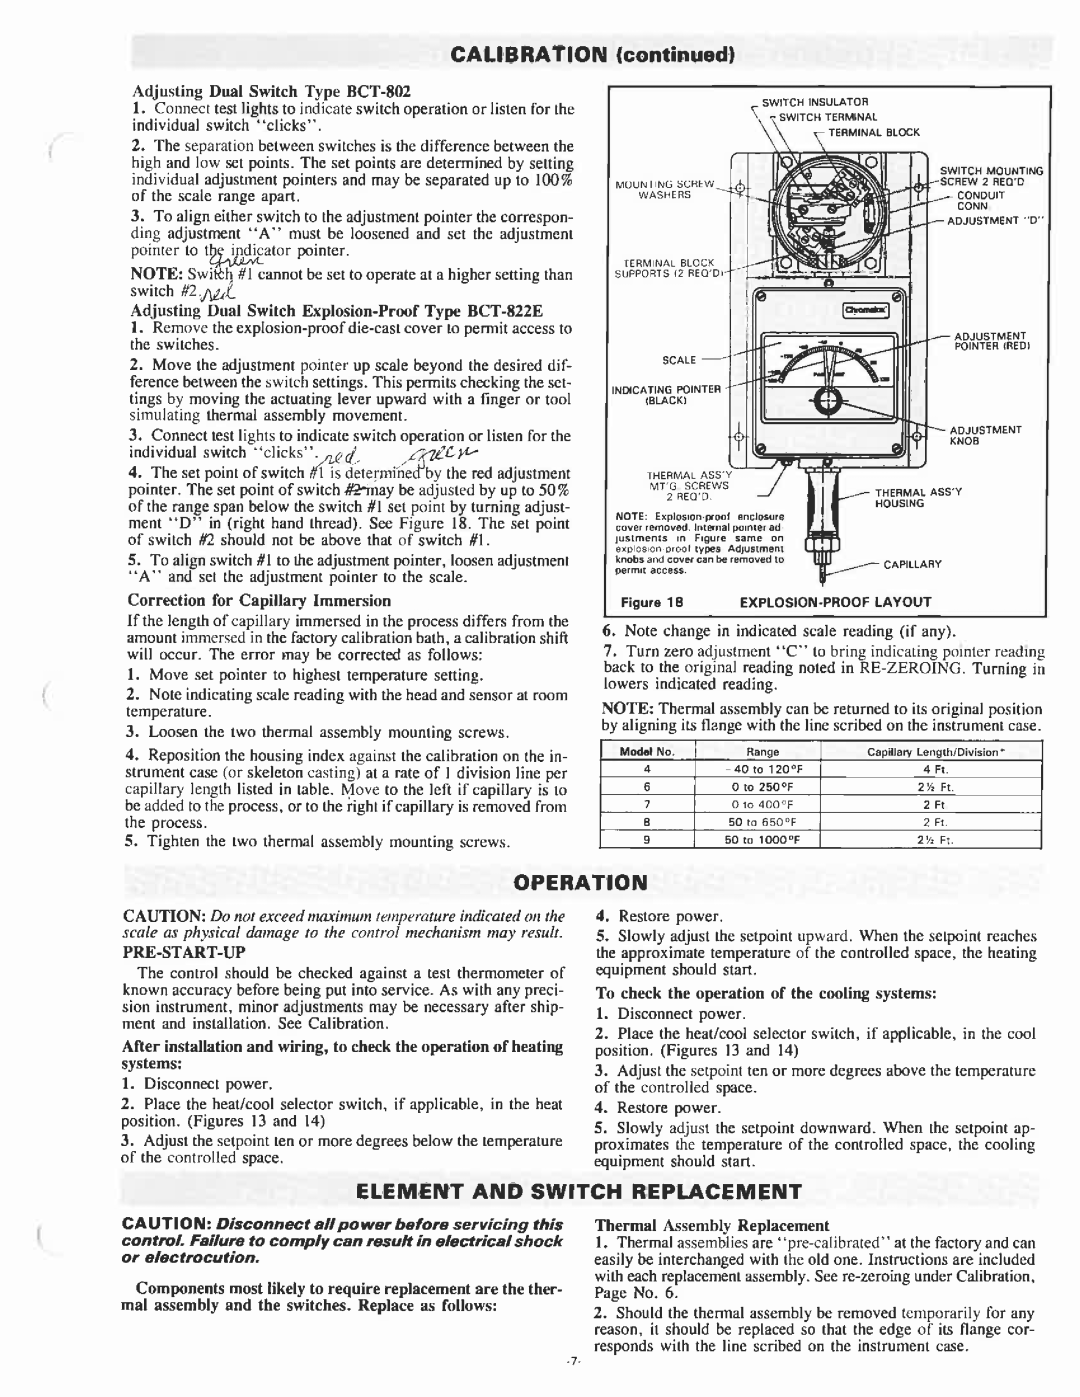 Chromalox BCT-820E, BCT-800 manual 